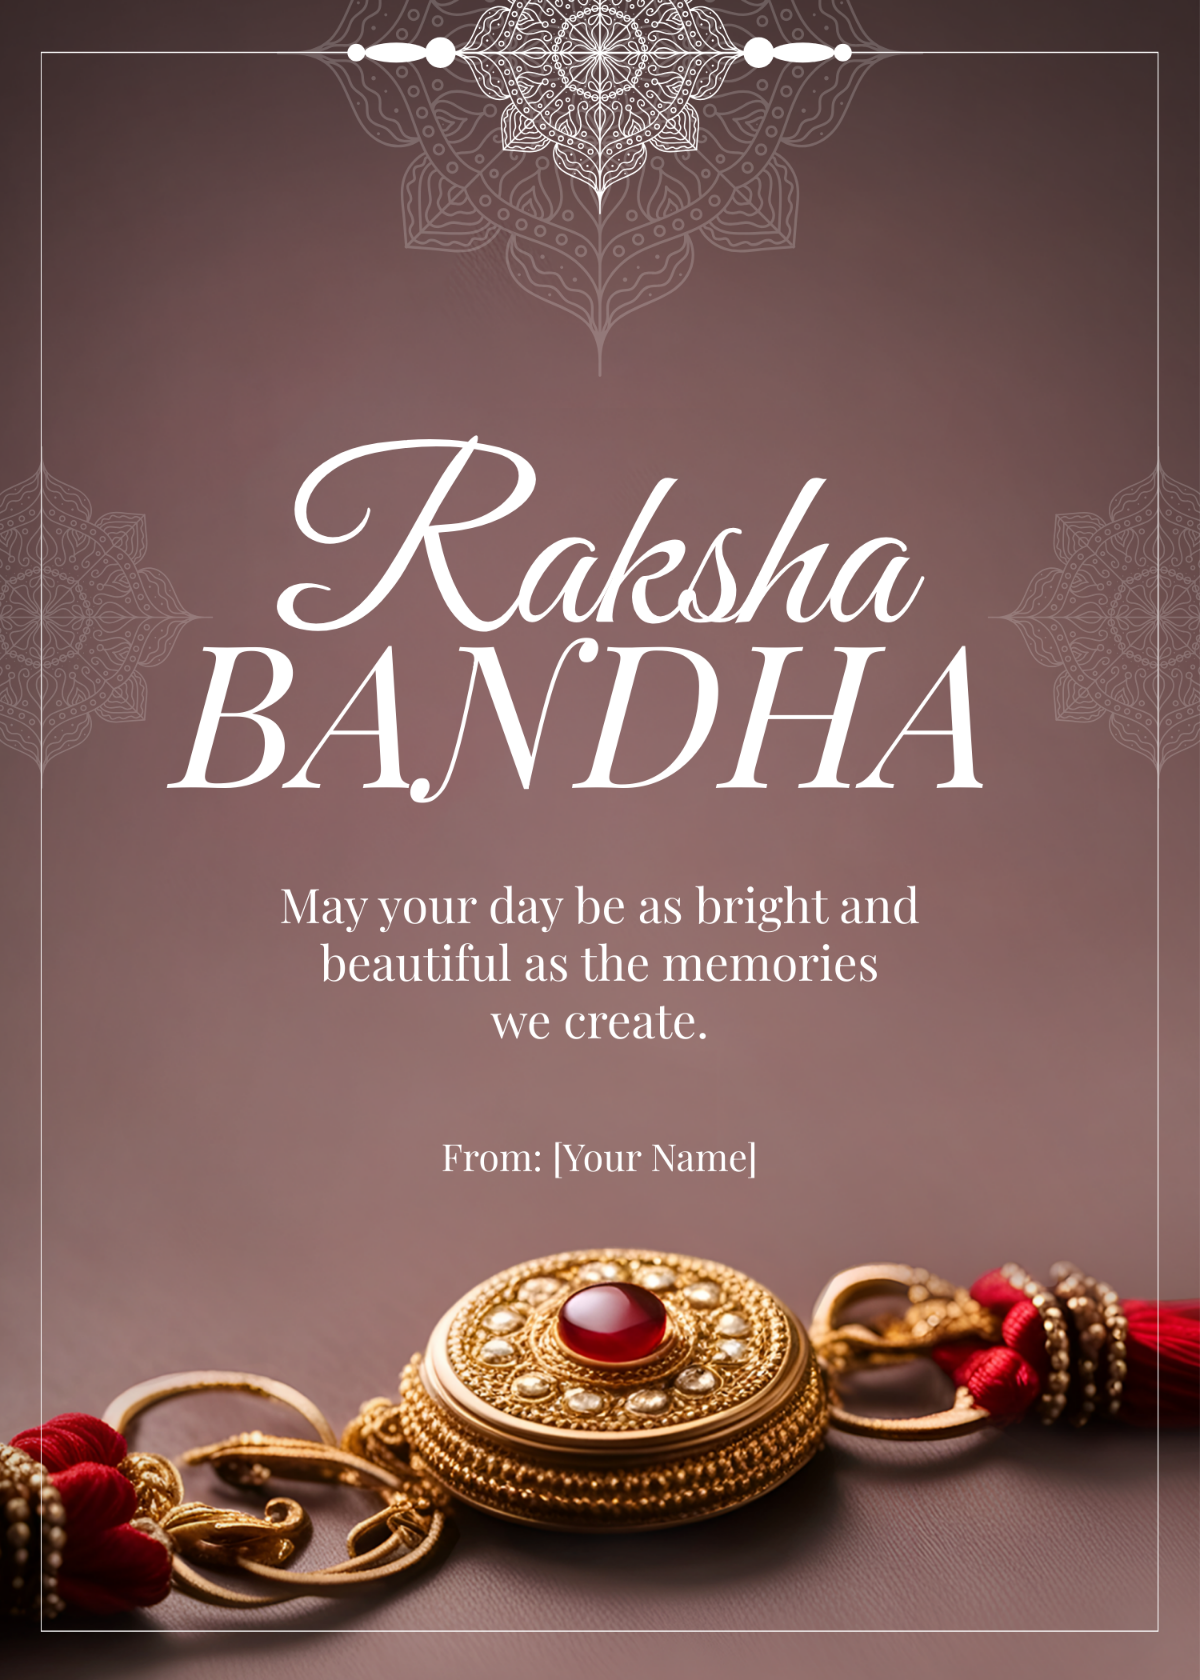 Raksha Bandhan Photo Wishes